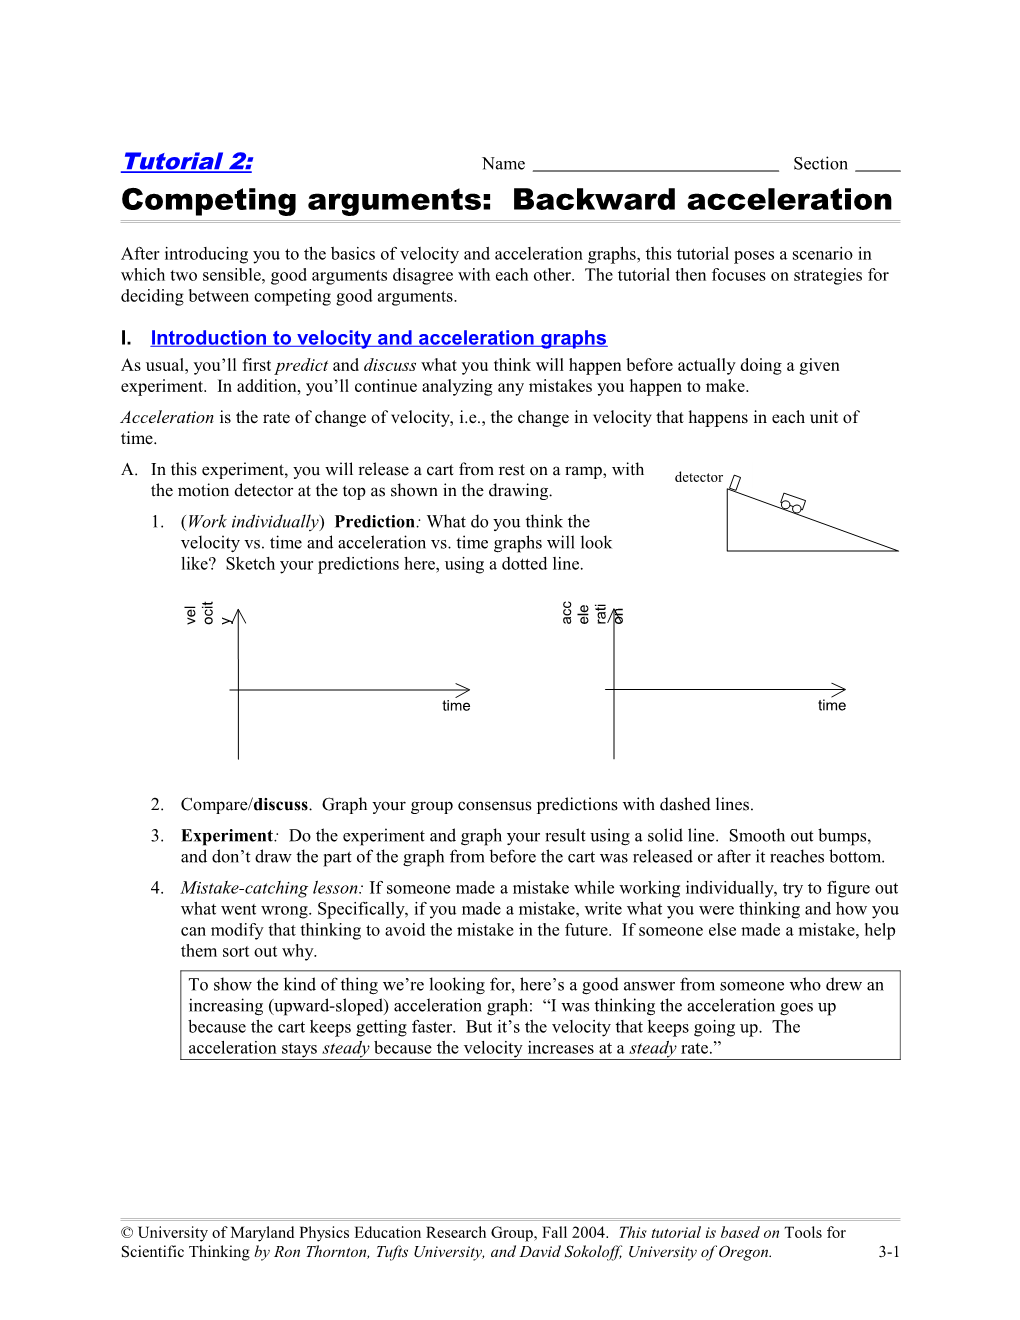 Competing Arguments: Backward Acceleration